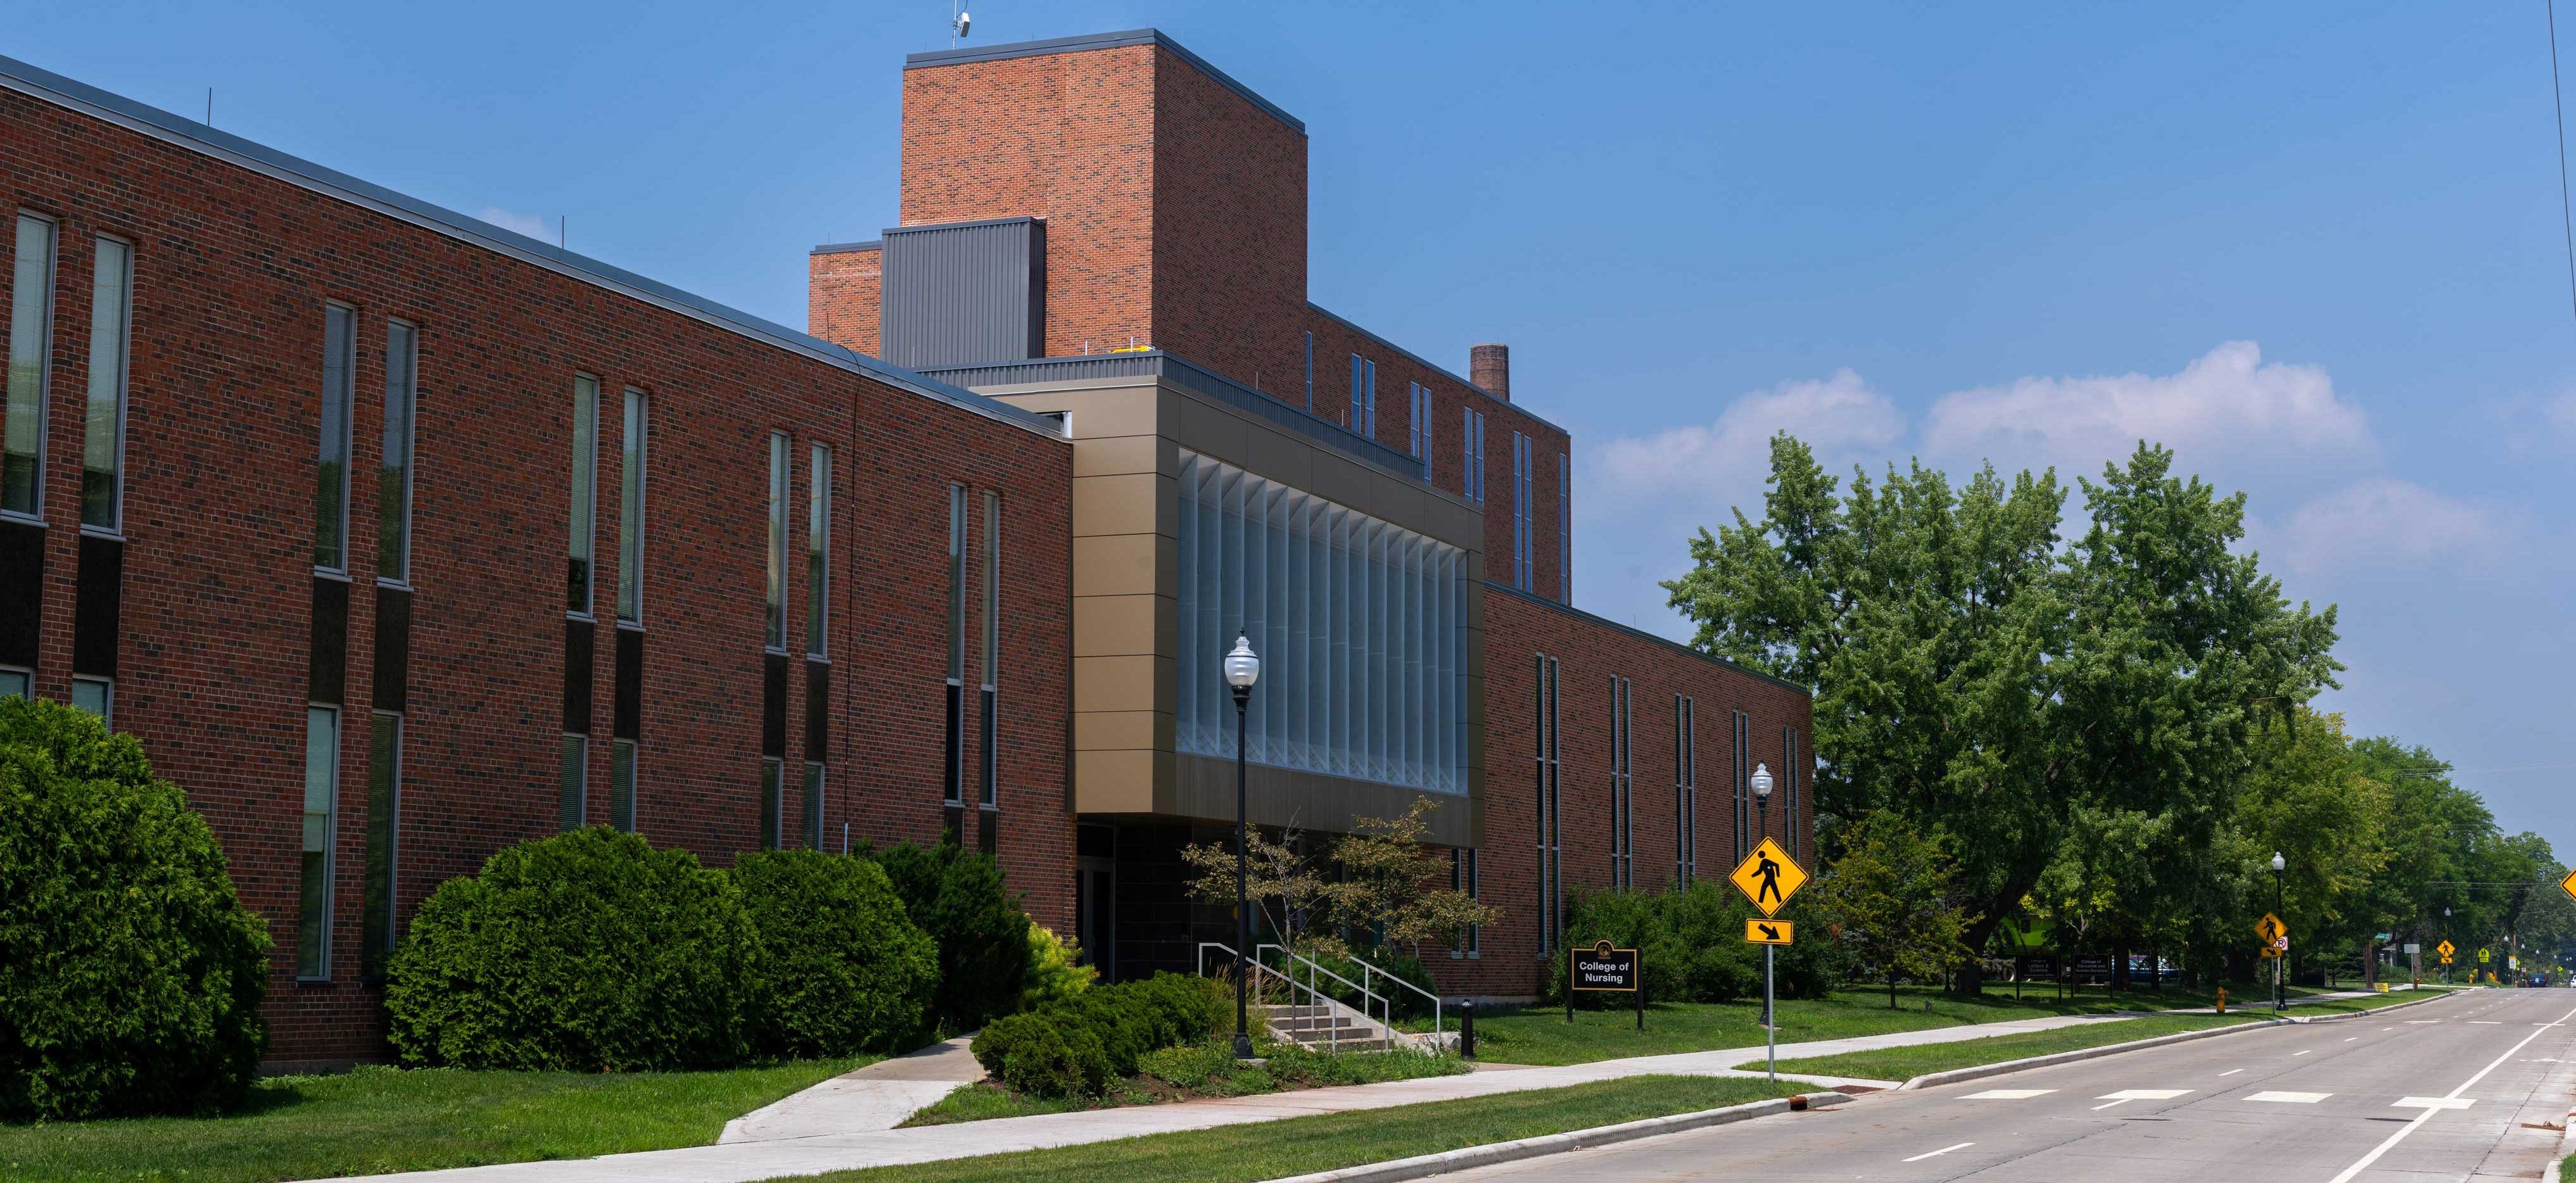 Exterior Photo of University of Wisconsin-Oshkosh Clow Science Center and Nursing Education Building